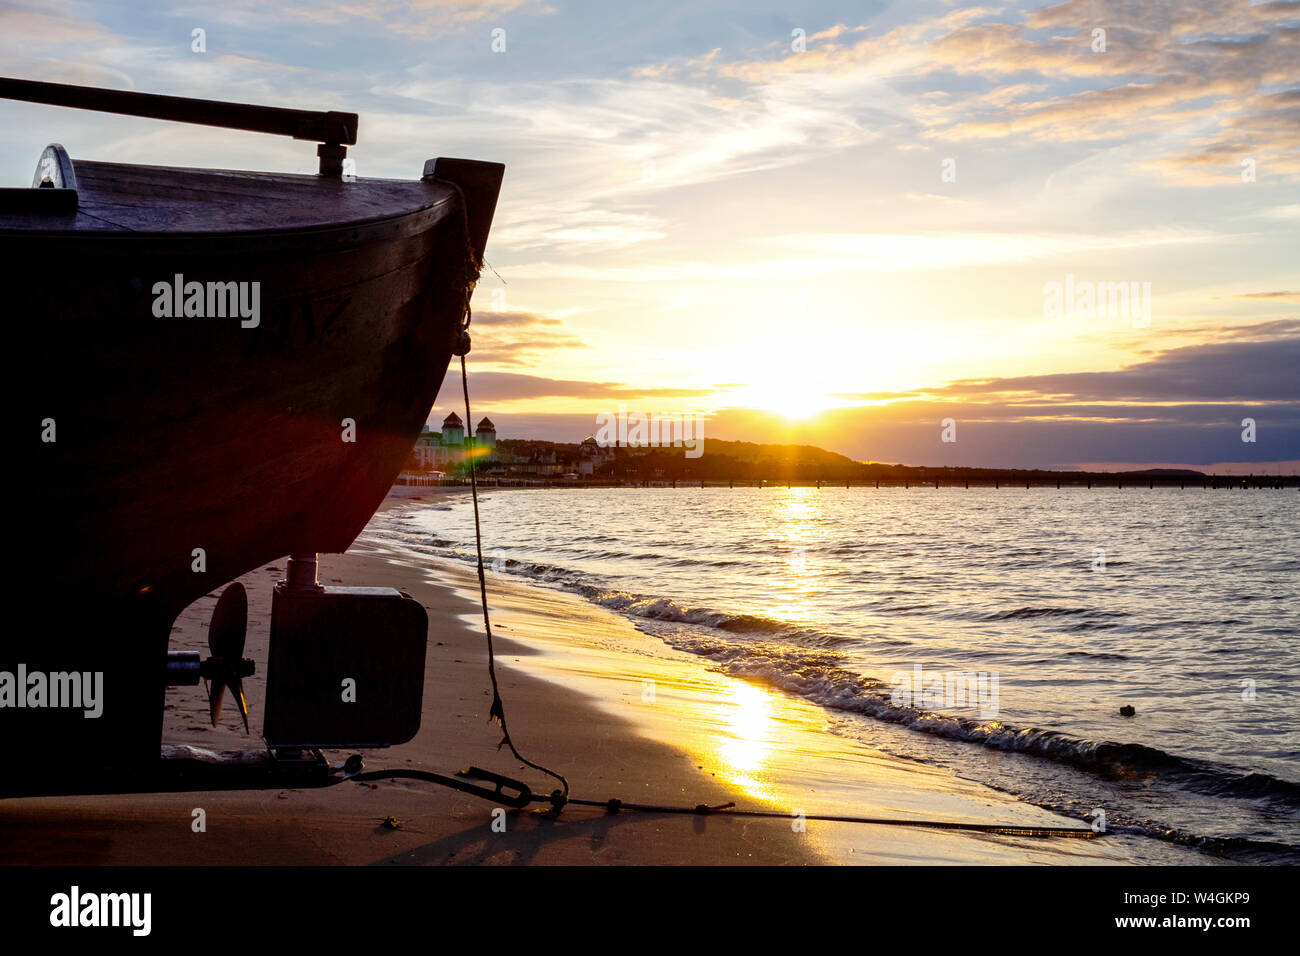 Boat on the beach at twilight, Binz, Ruegen, Germany Stock Photo